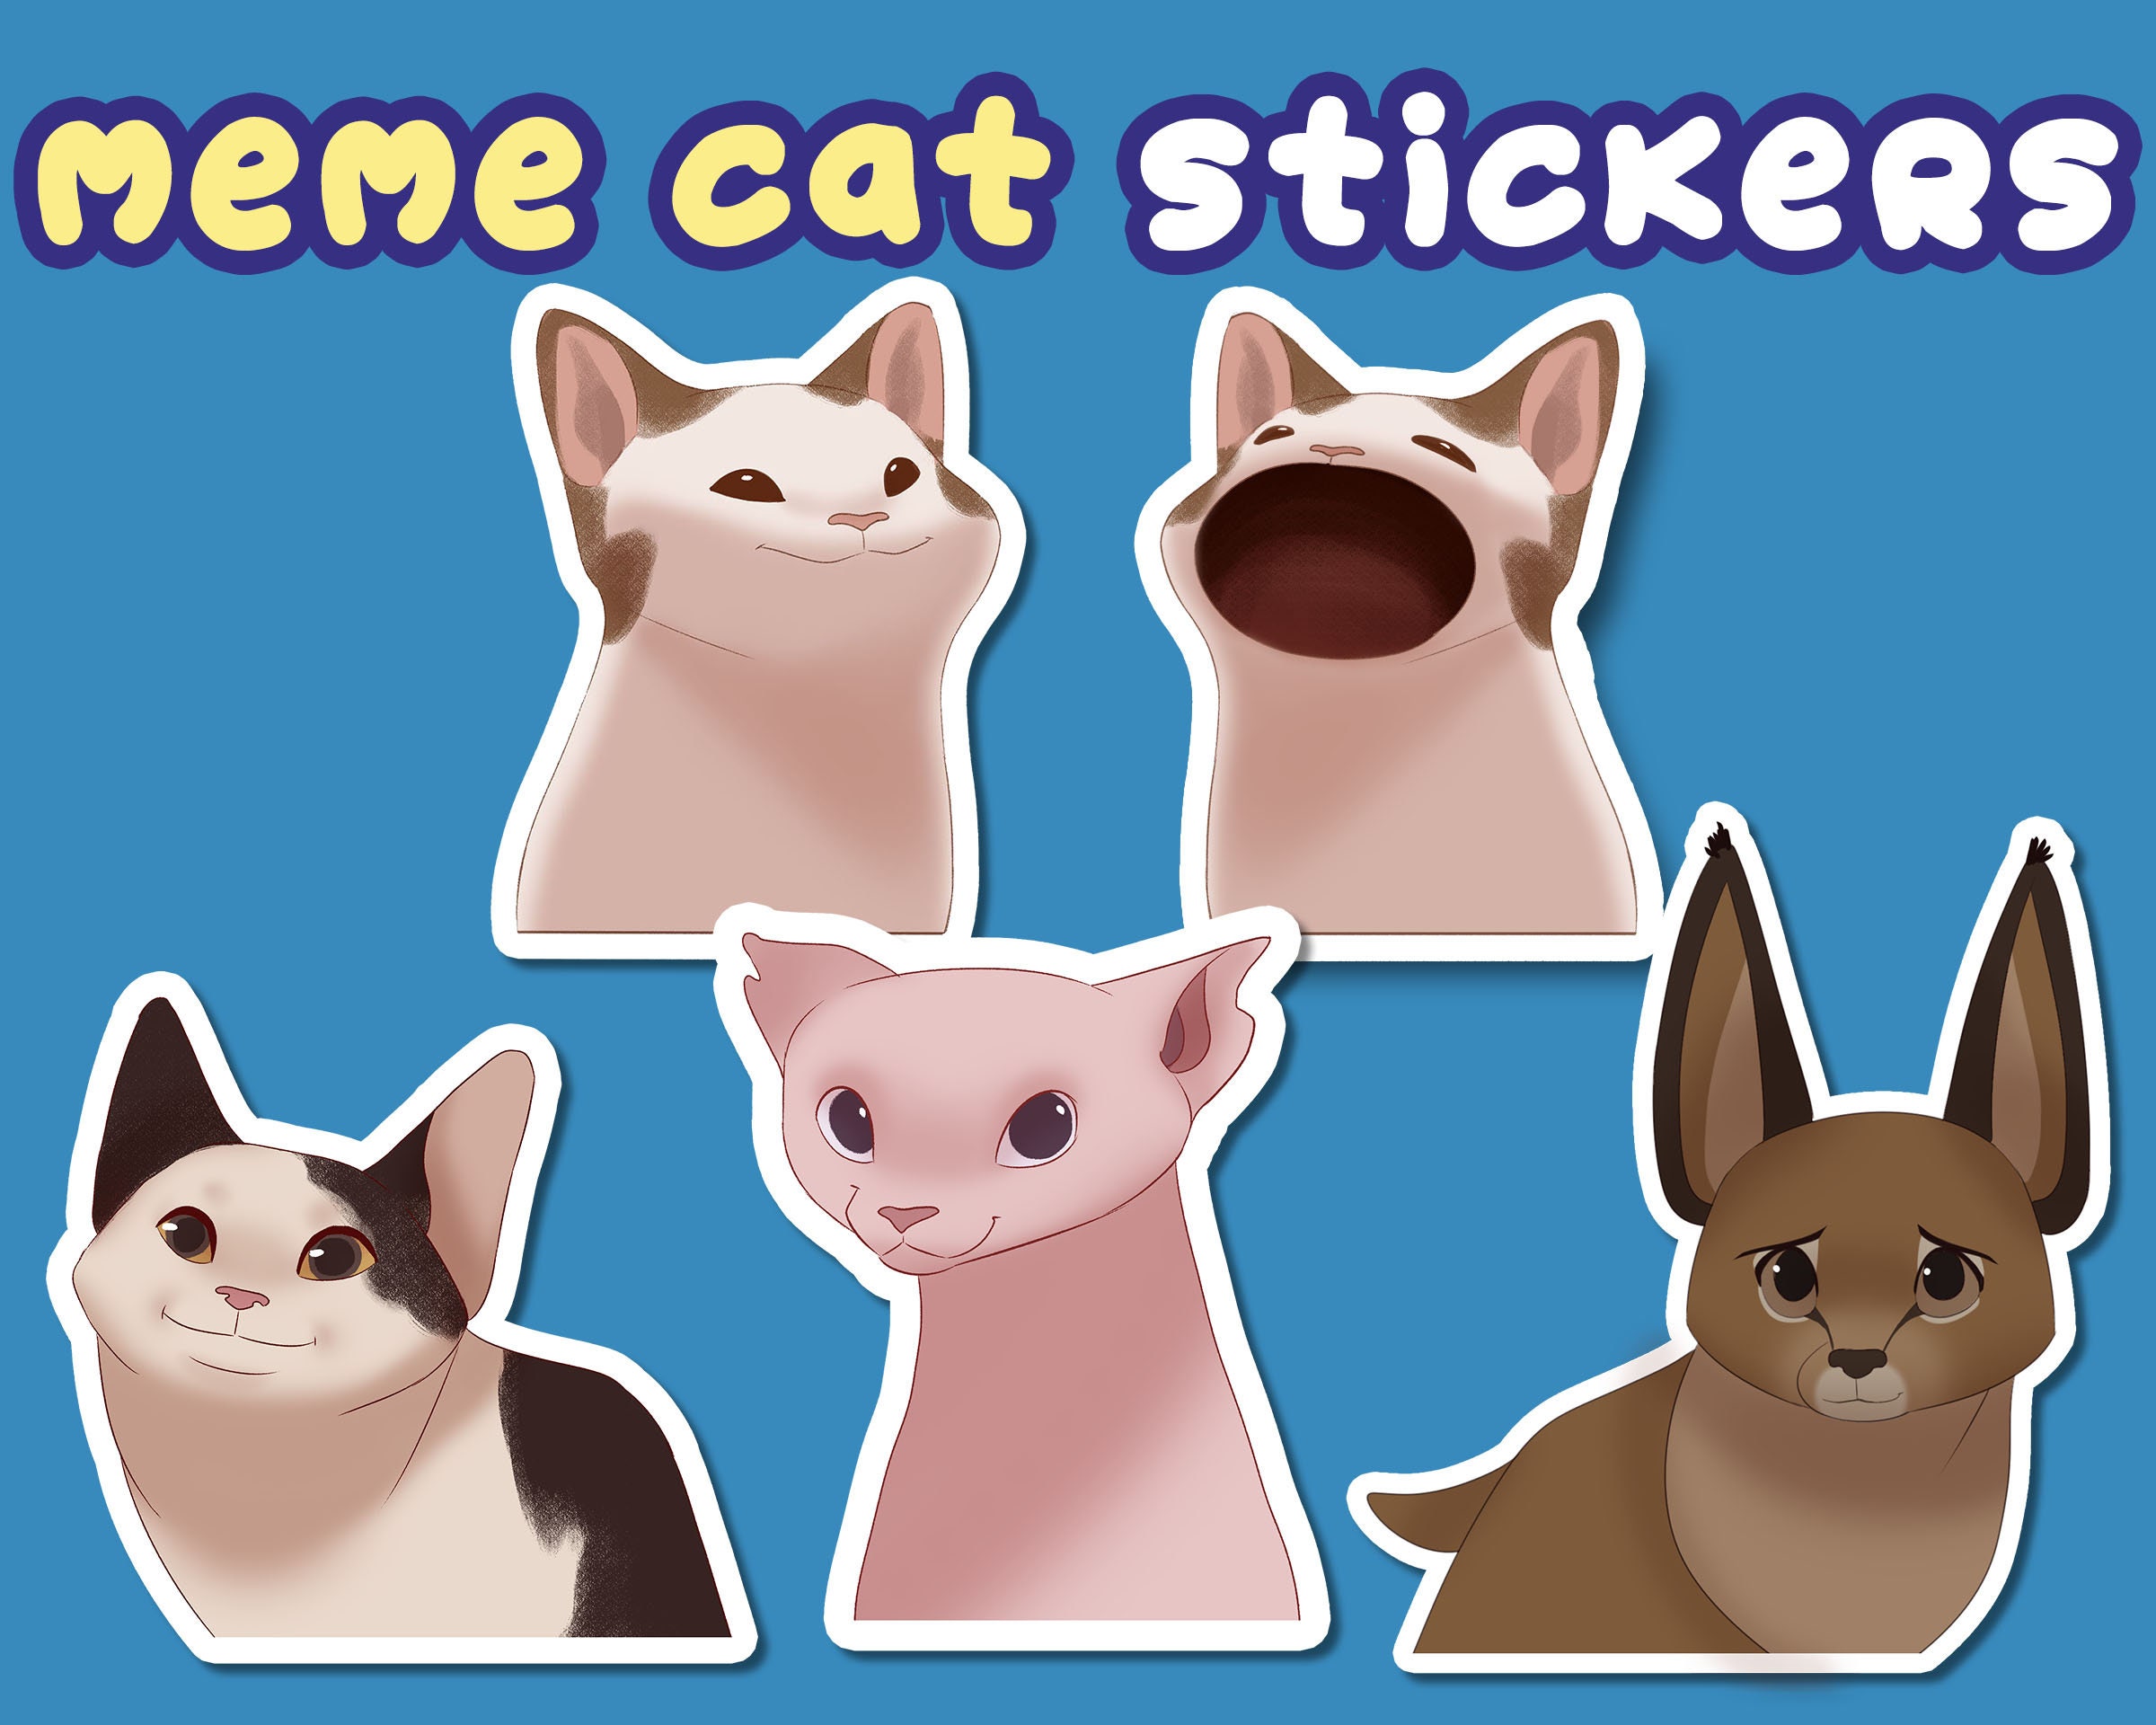 Big Floppa - Caracal meme cat / fat floppa / cursed floppa | Sticker